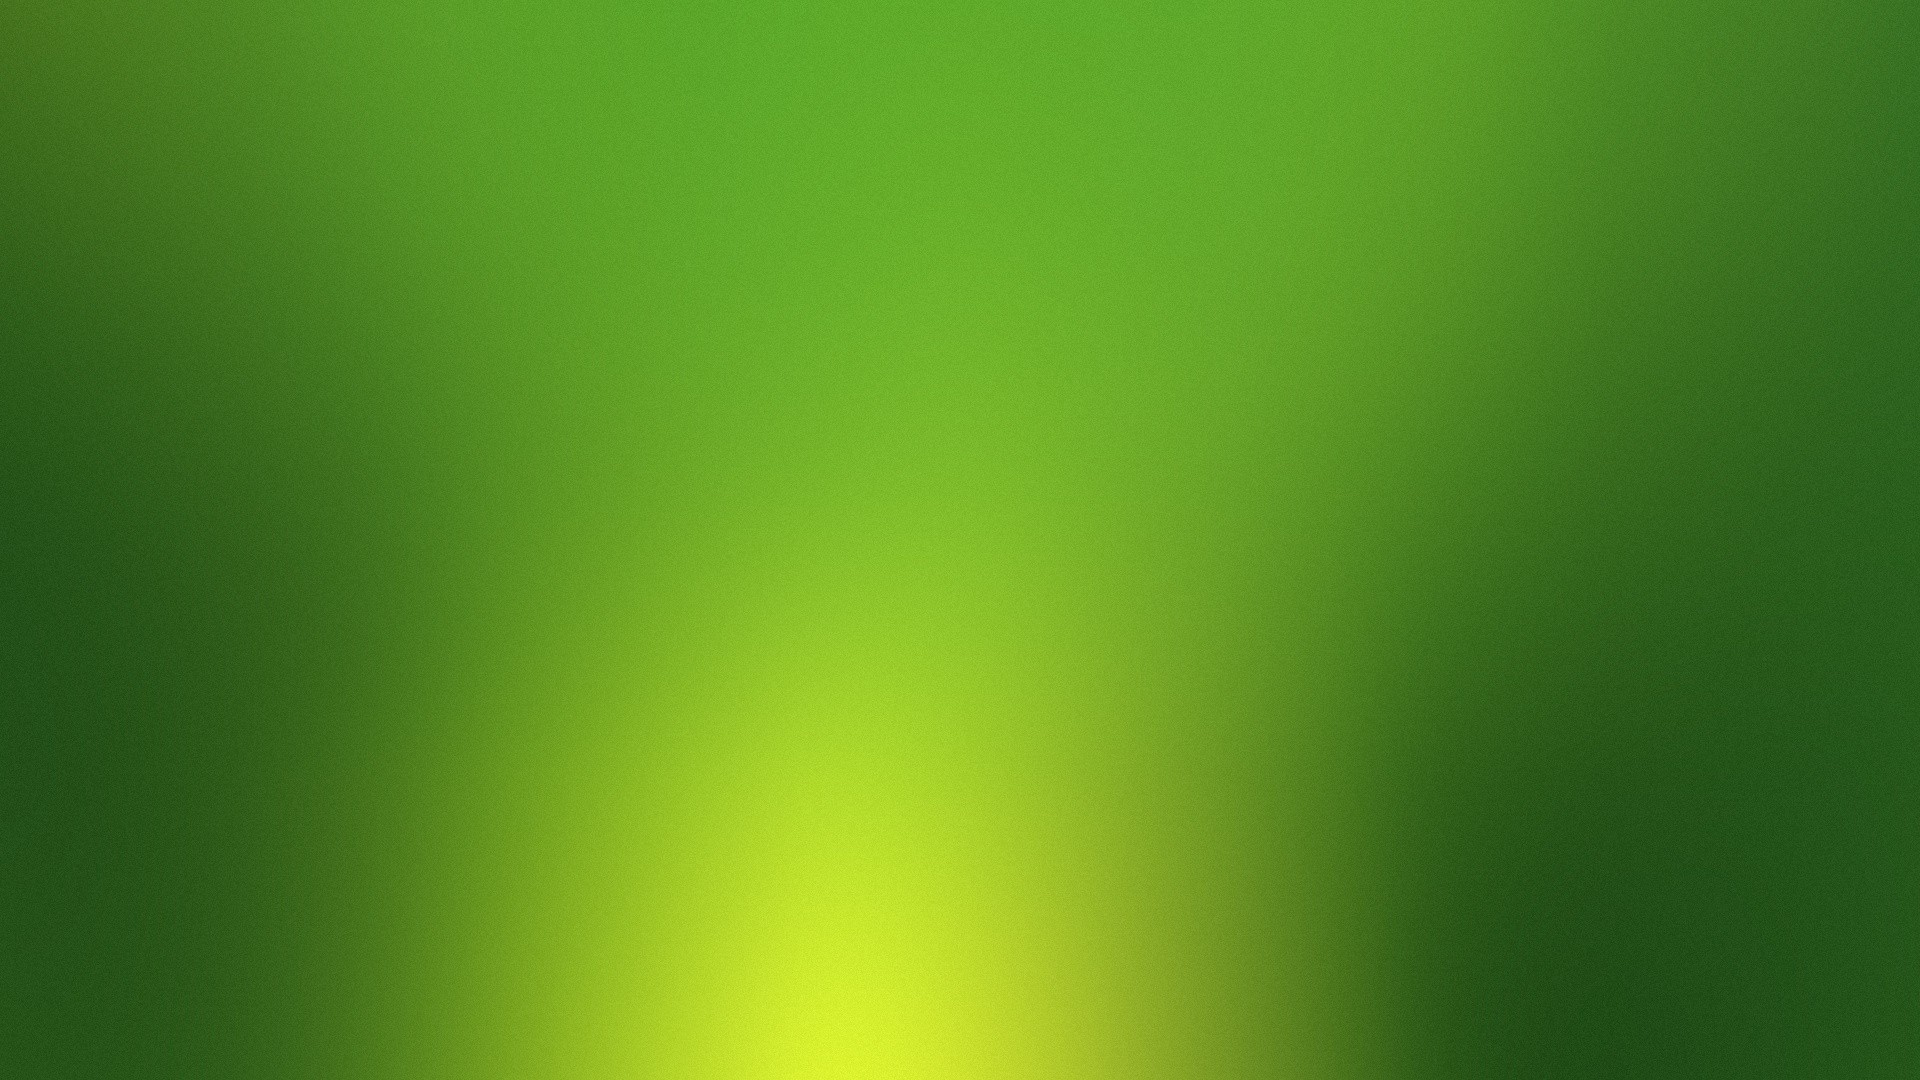 General 1920x1080 blurred green gradient CGI green background